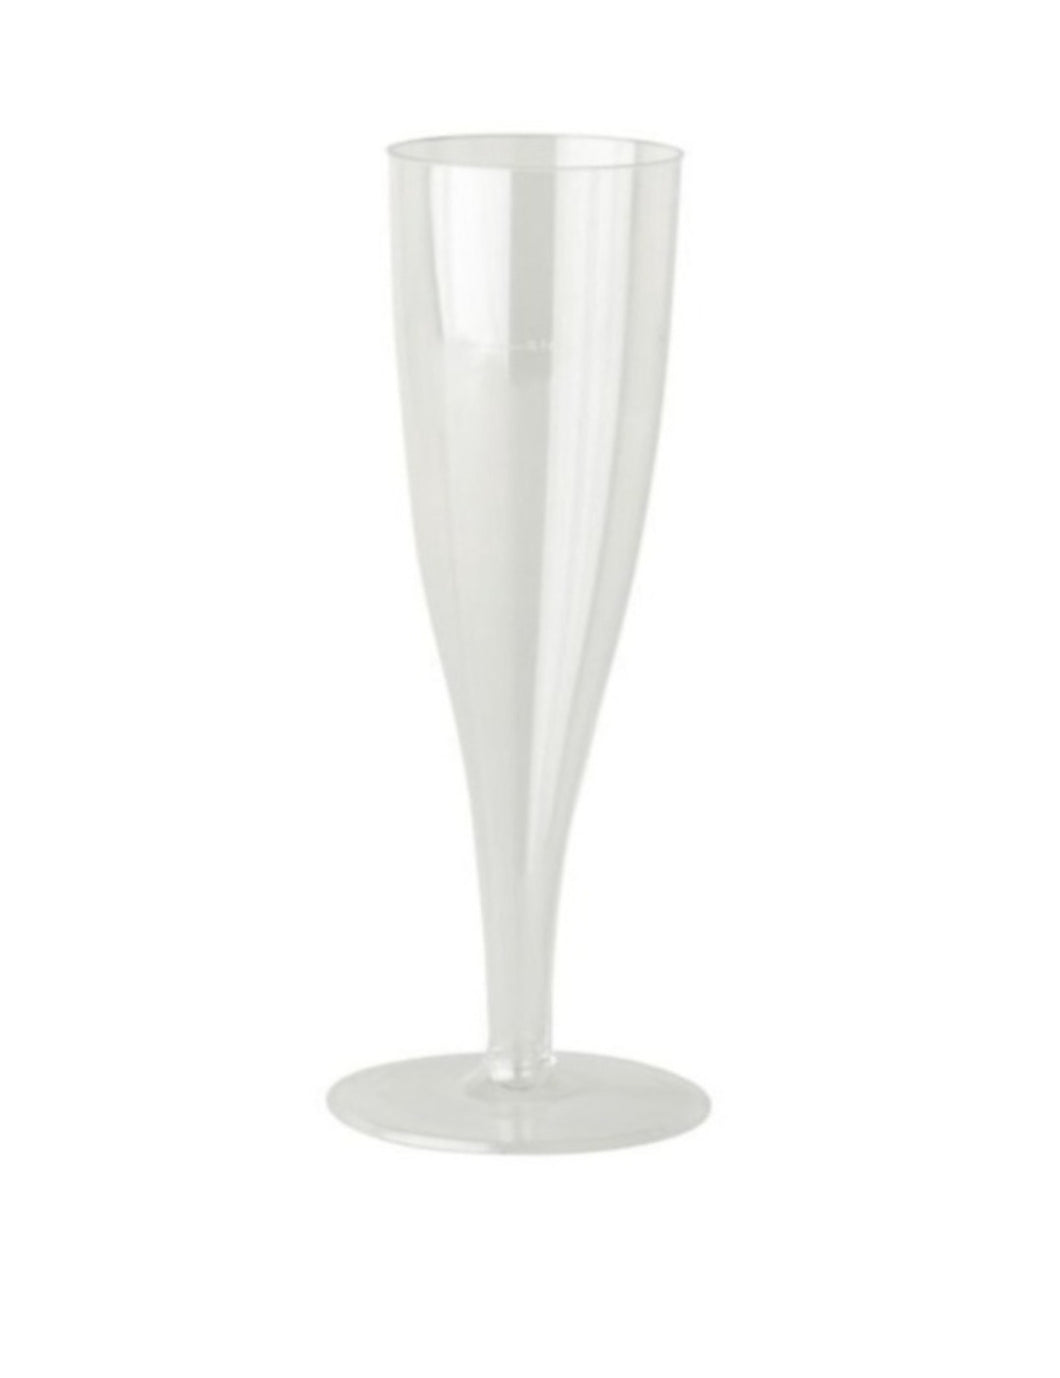 170ml Clear Reusable Plastic Champagne Flutes